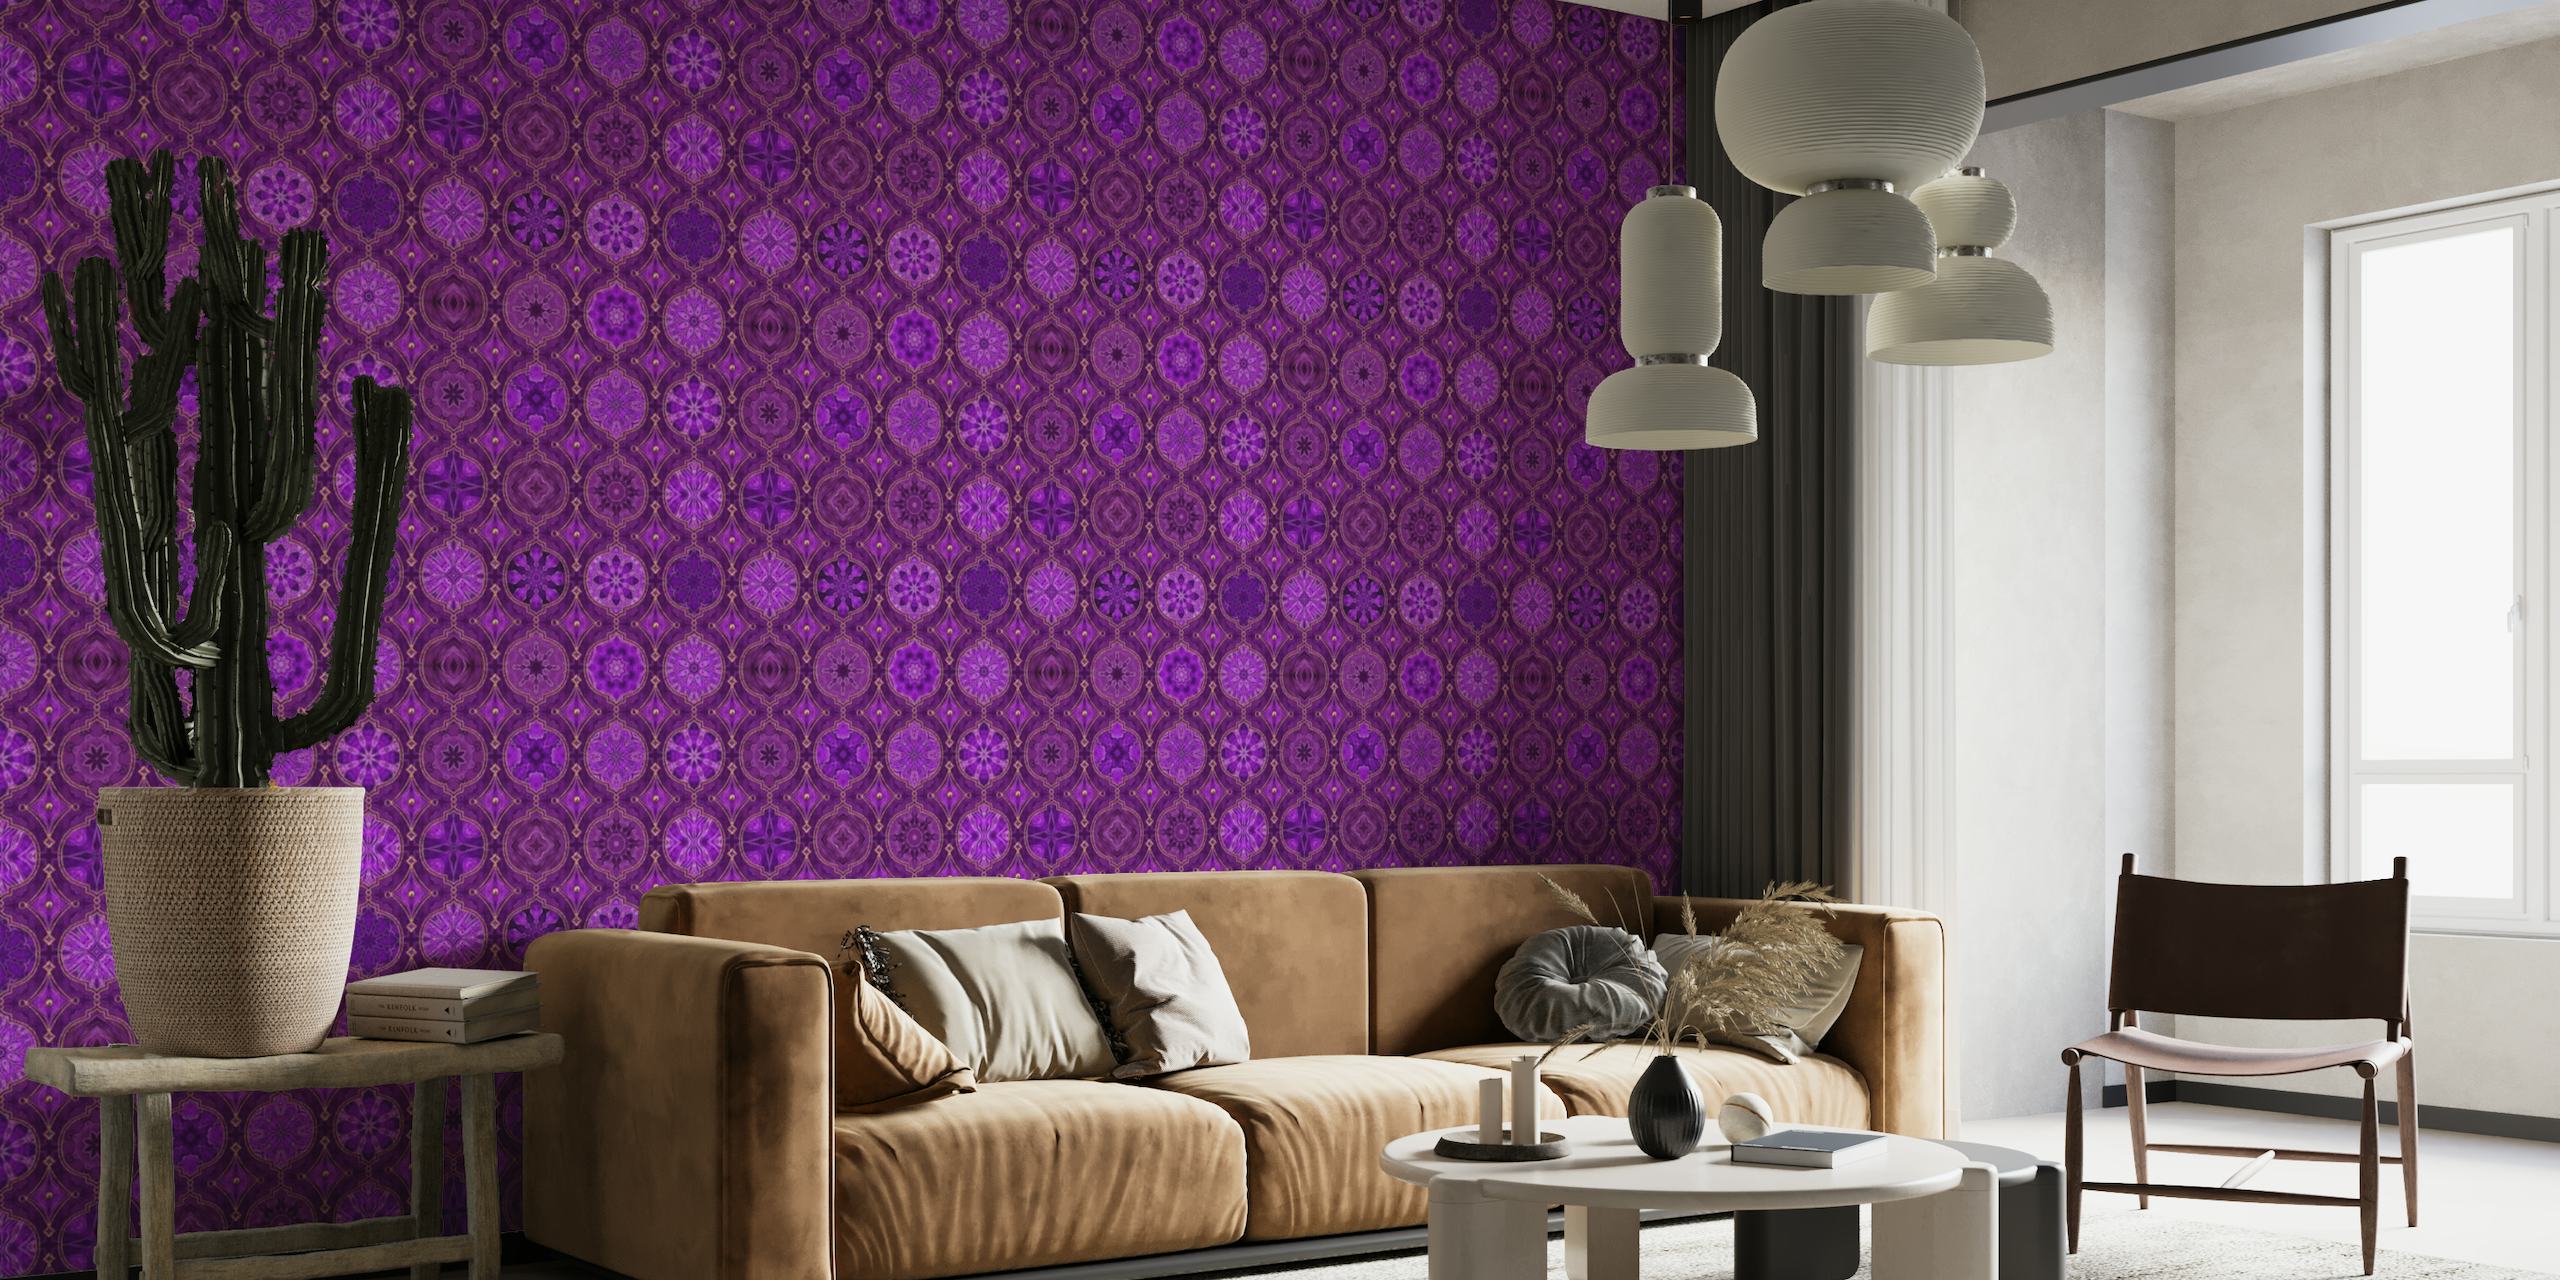 Treasures of Morocco Oriental Tile Design Fuchsia Purple Gold papel de parede